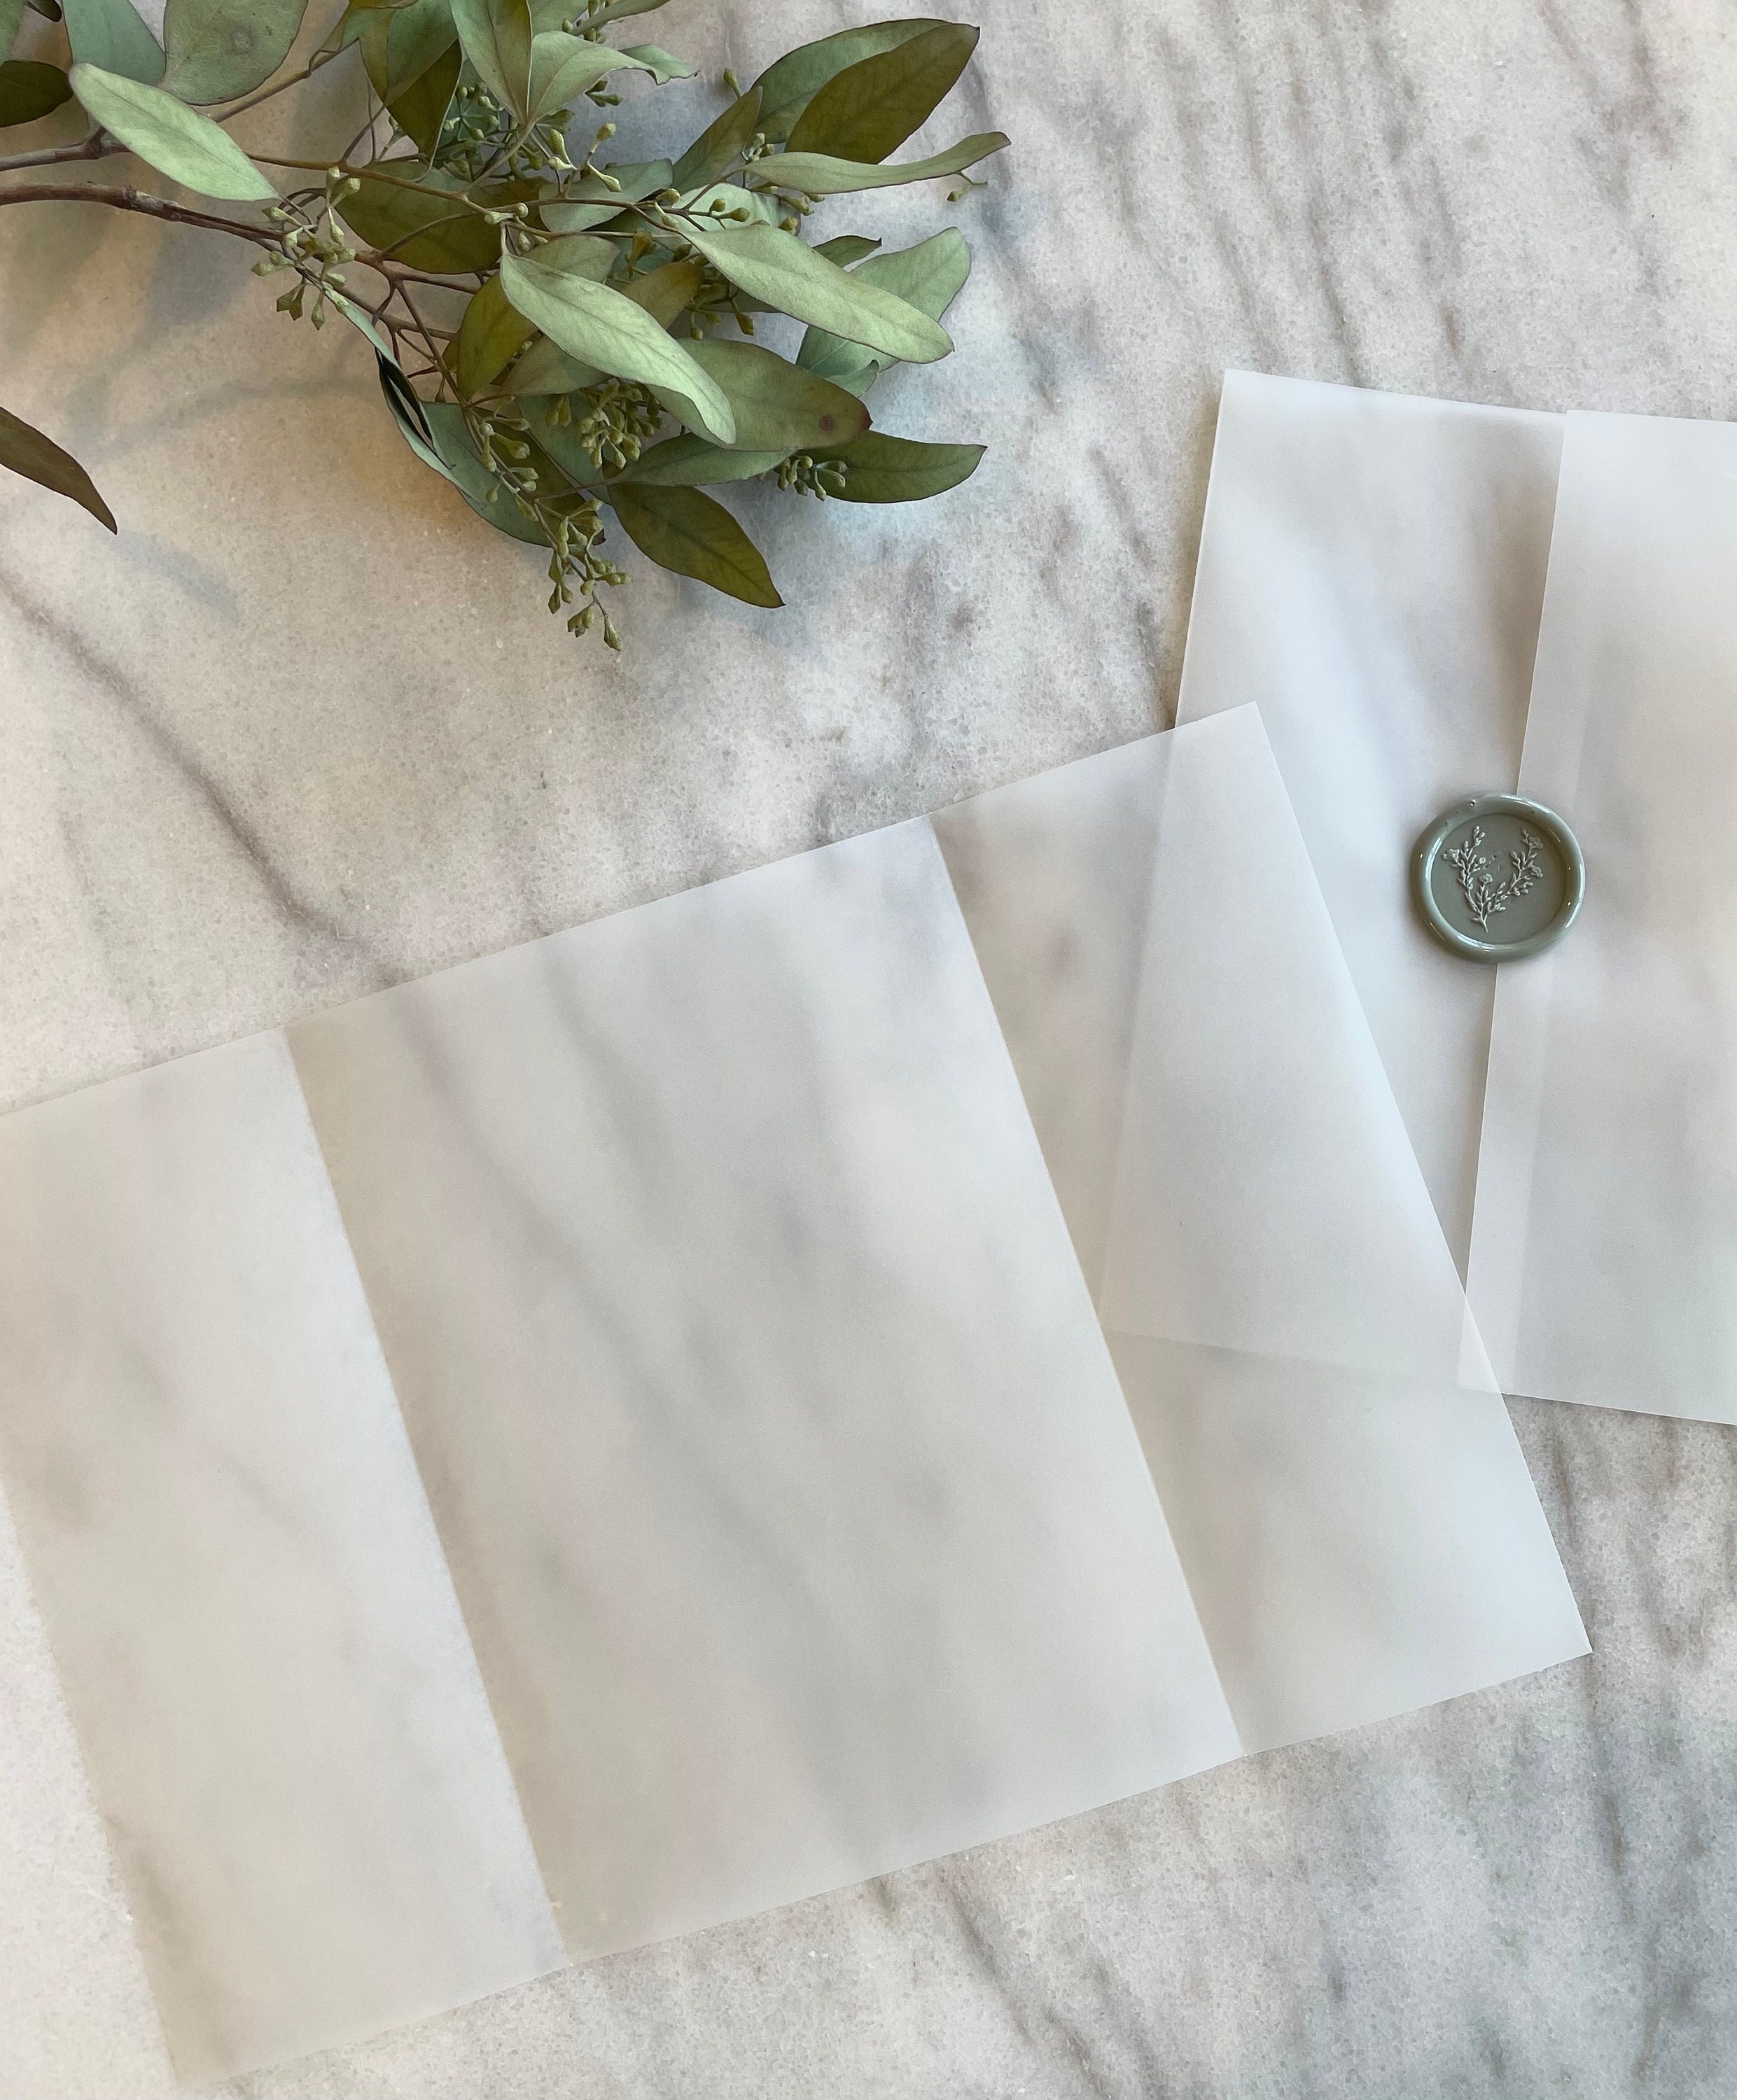 100 Set Vellum Jackets for 5x7 Invitations + 100 Gold Wax Seal Stickers |  Professionally Folded | Premium Quality Translucent Paper Wraps | Elegant